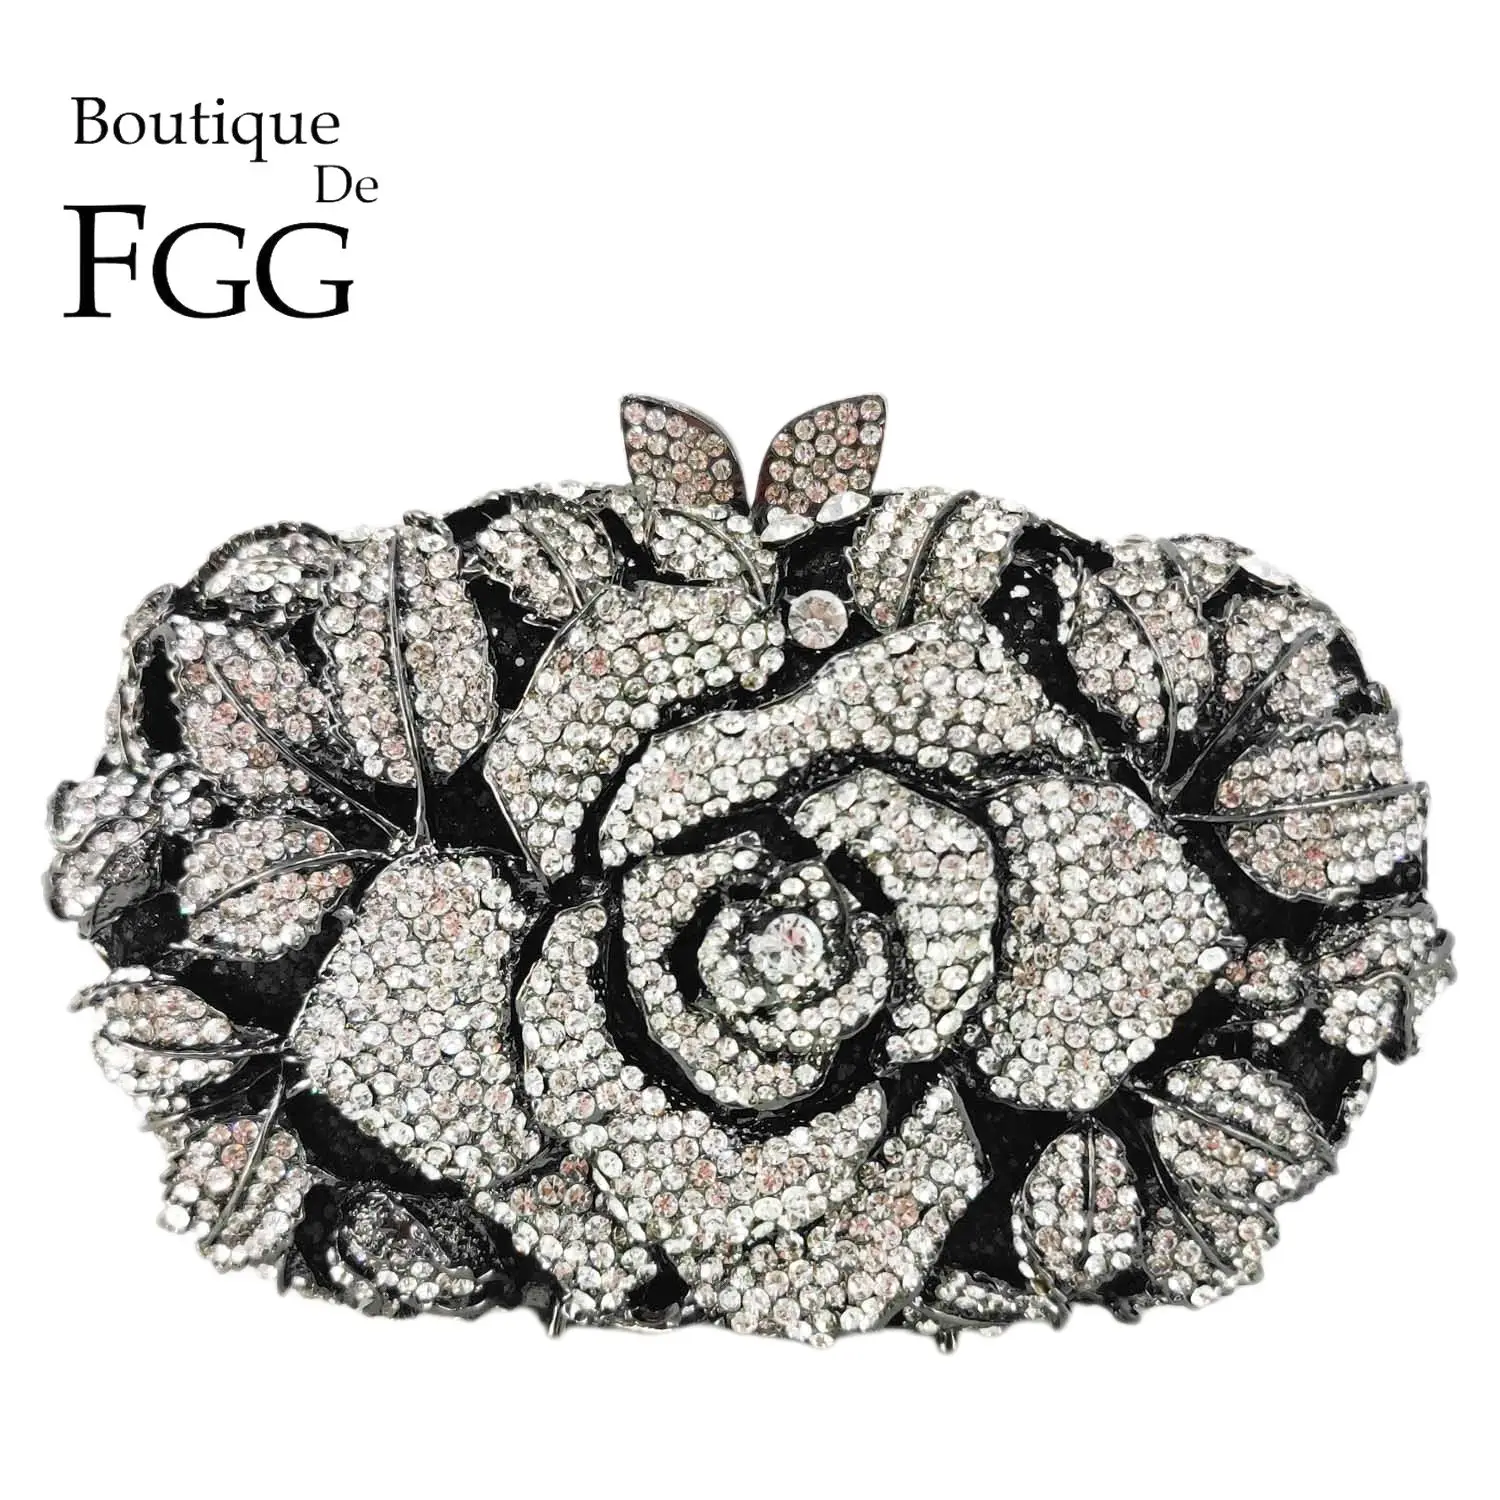 

Boutique De FGG Black Flower Clutch Evening Bags for Women Formal Party Crystal Handbags Bride Diamond Minaudiere Purses Bag